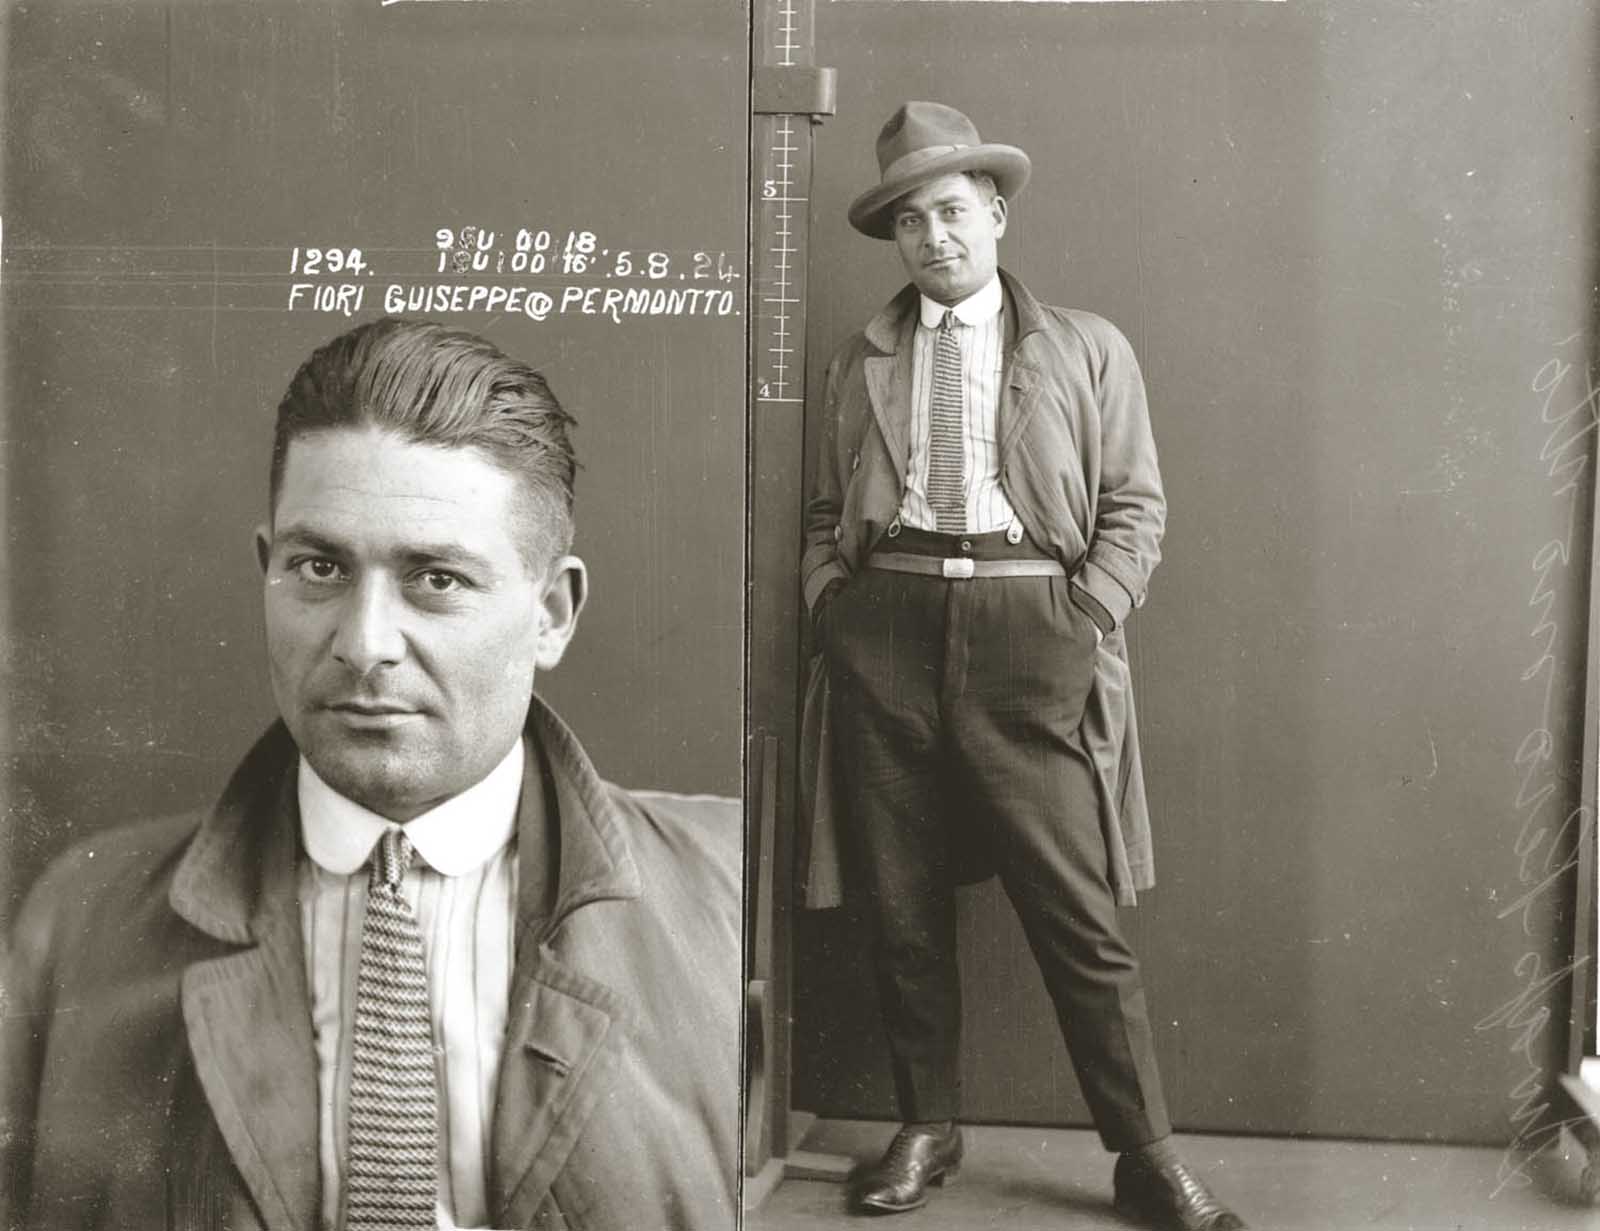 Guiseppe Fiori, alias Permontto. 1924.